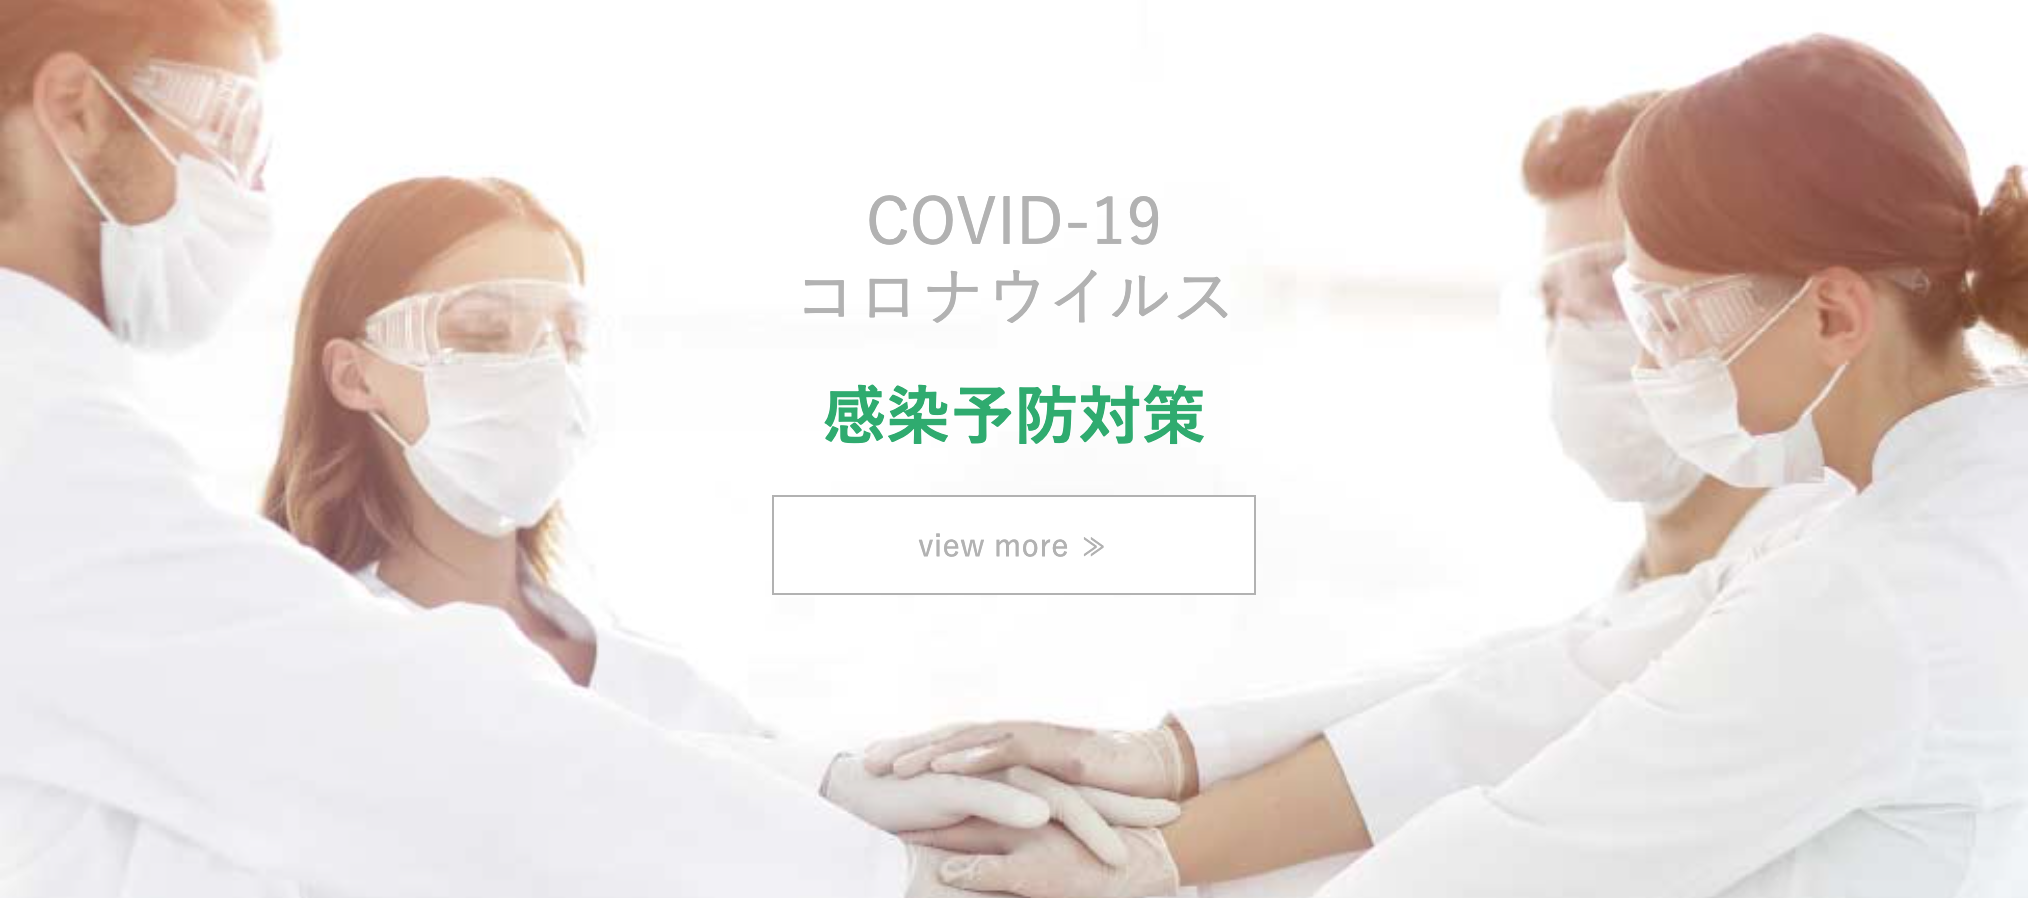 COVID-19コロナ感染症対策